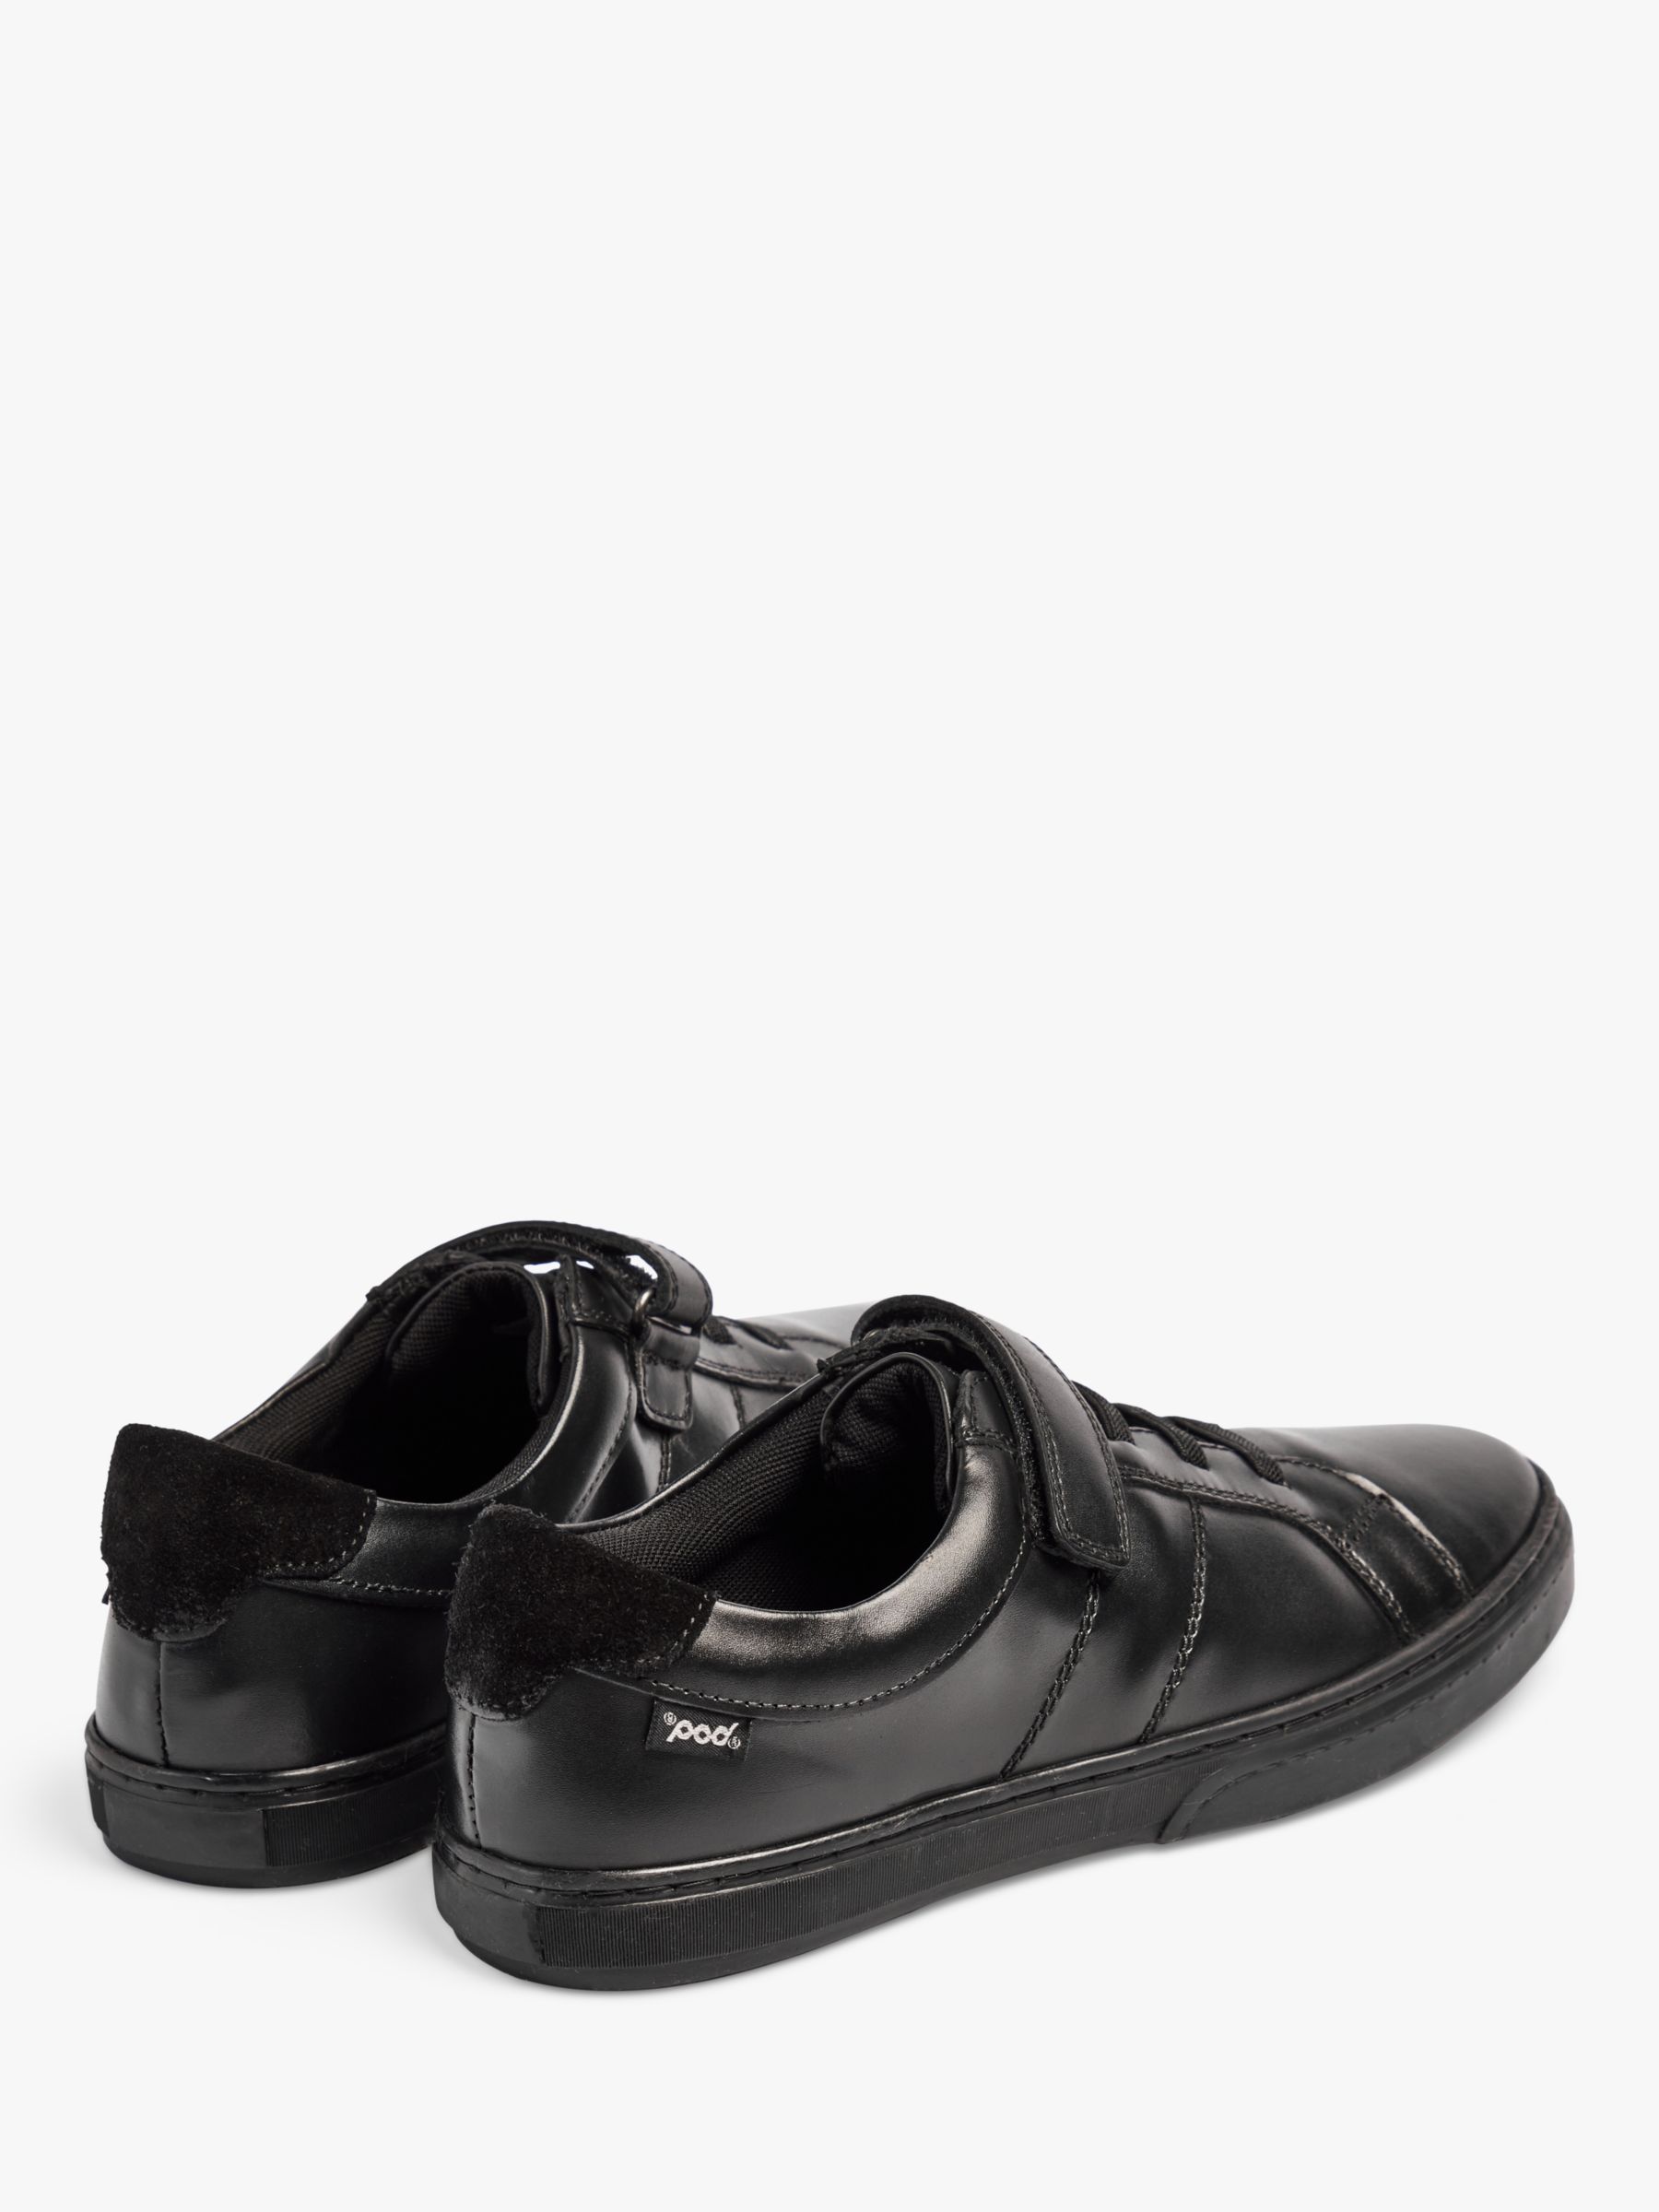 Pod Kids' Krew Leather School Shoes, Black at John Lewis & Partners